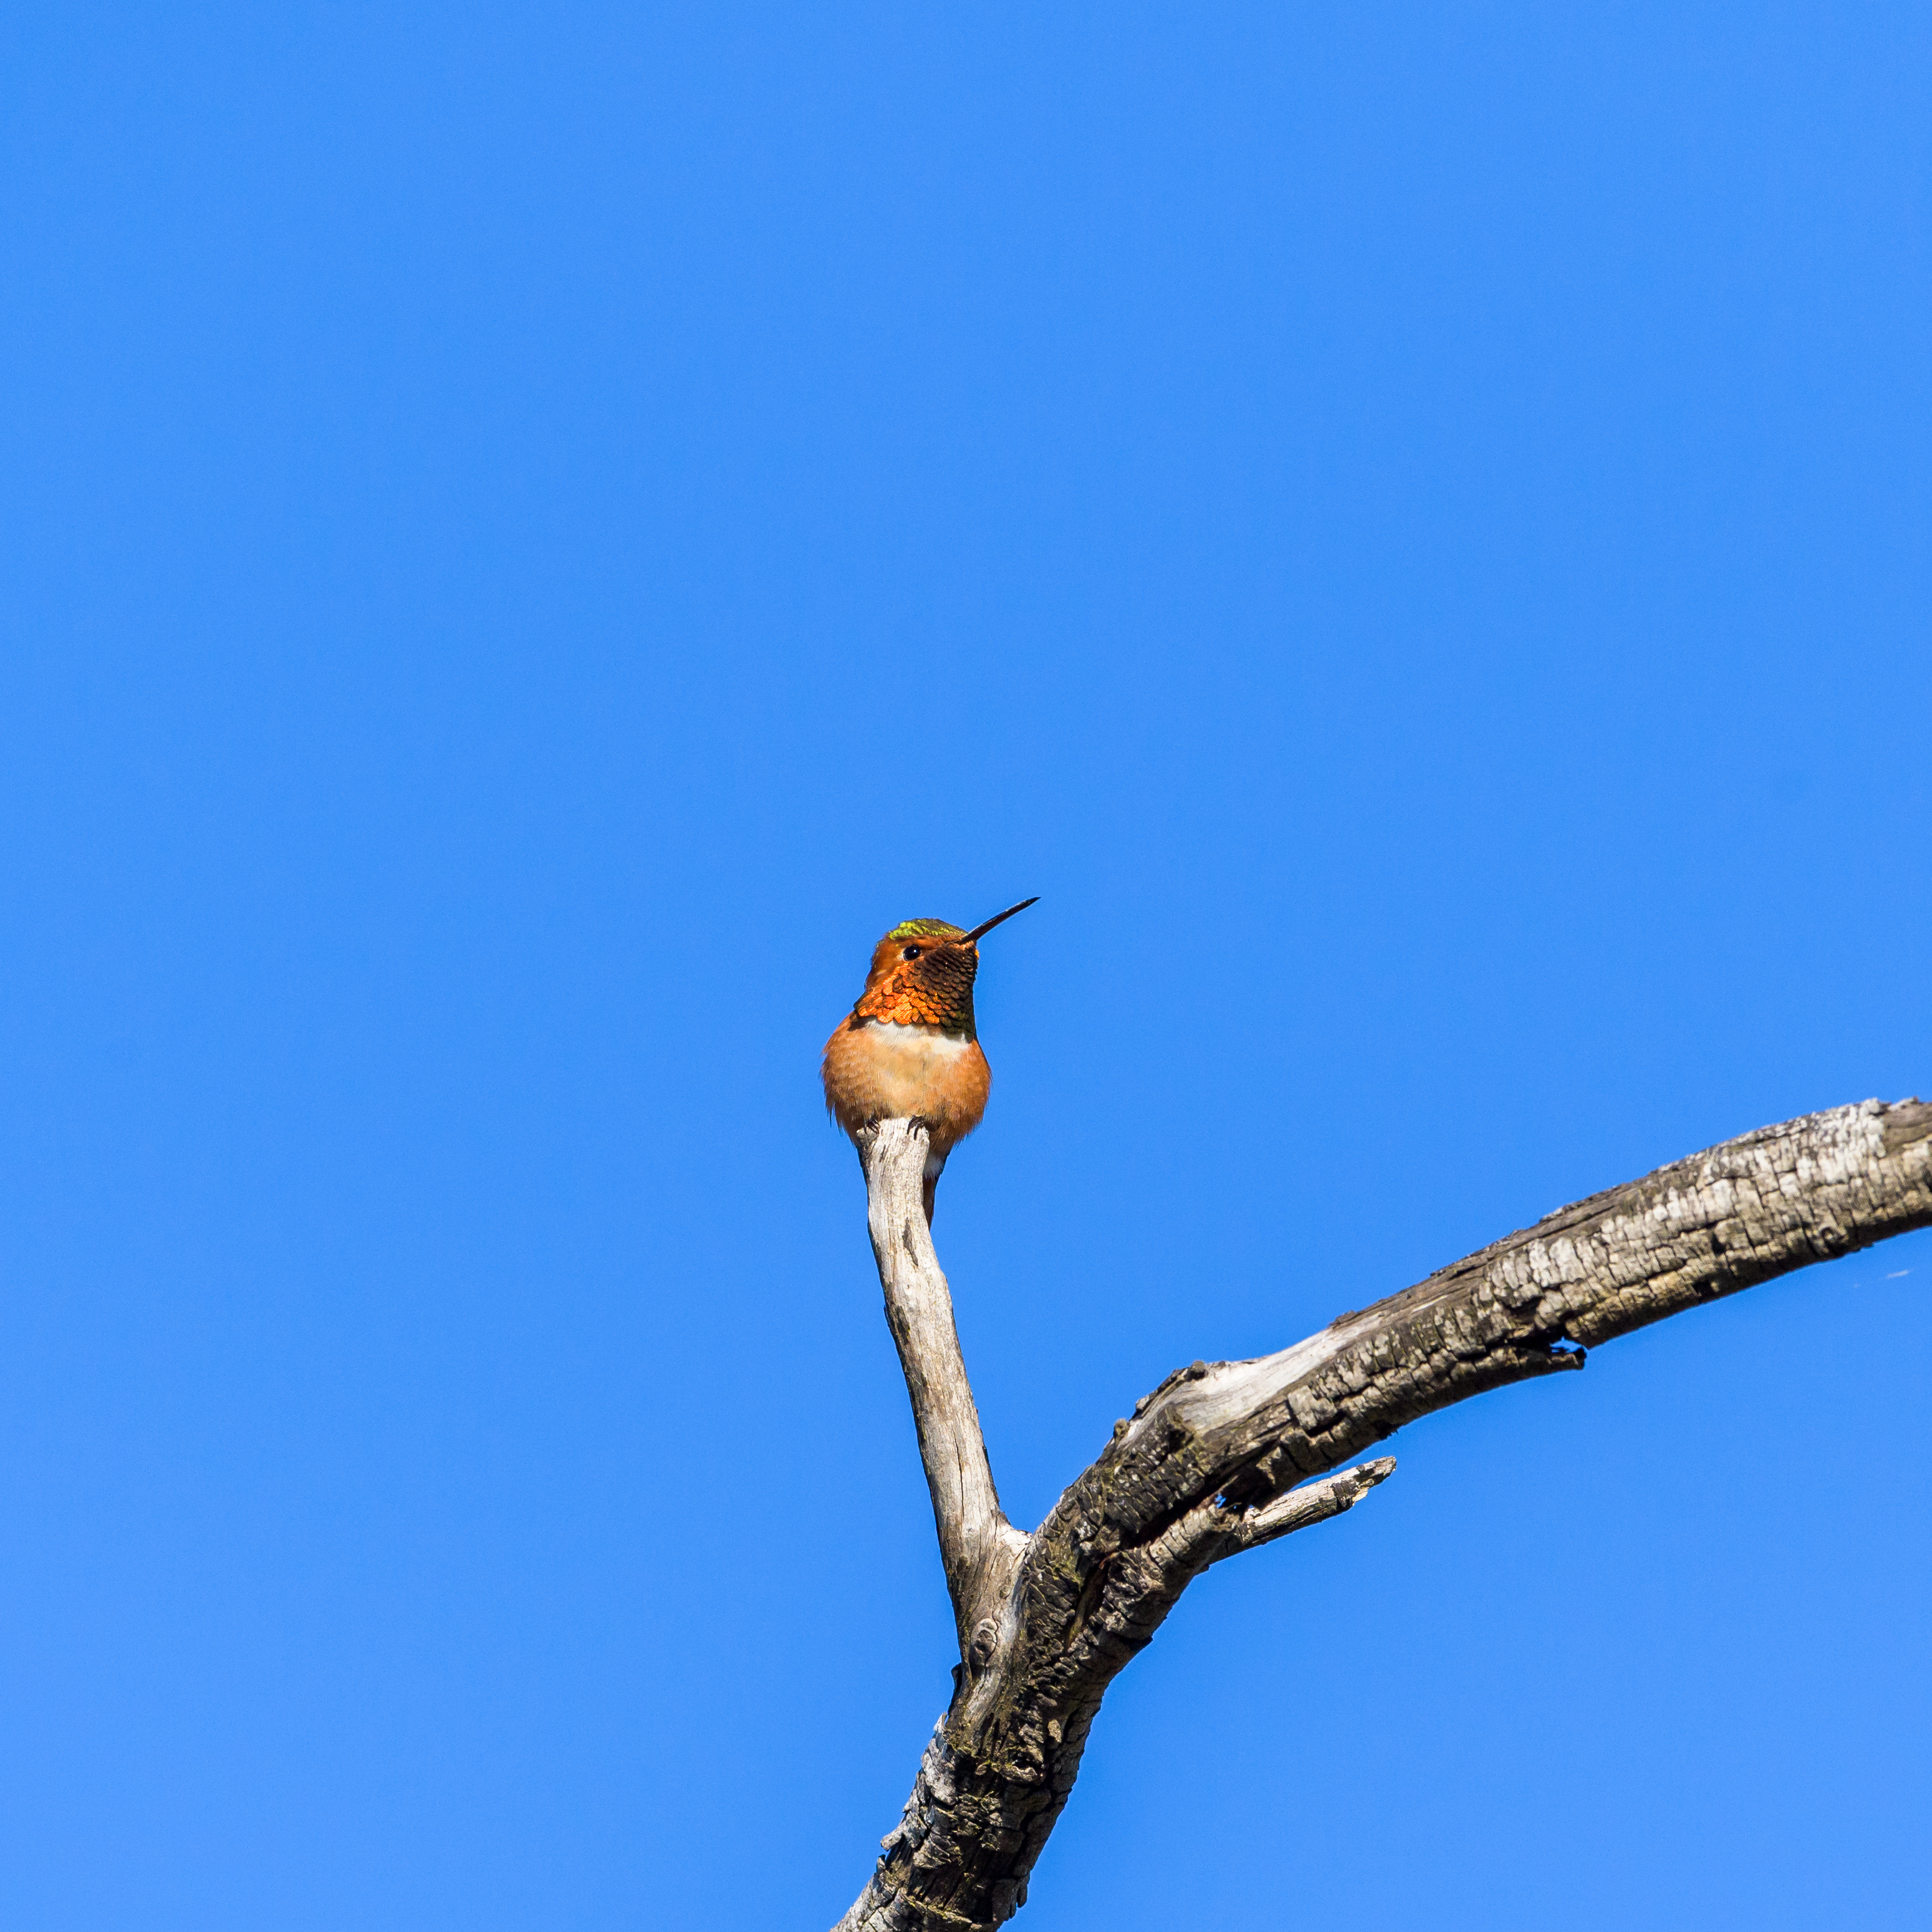 Hummingbird sitting atop a tree